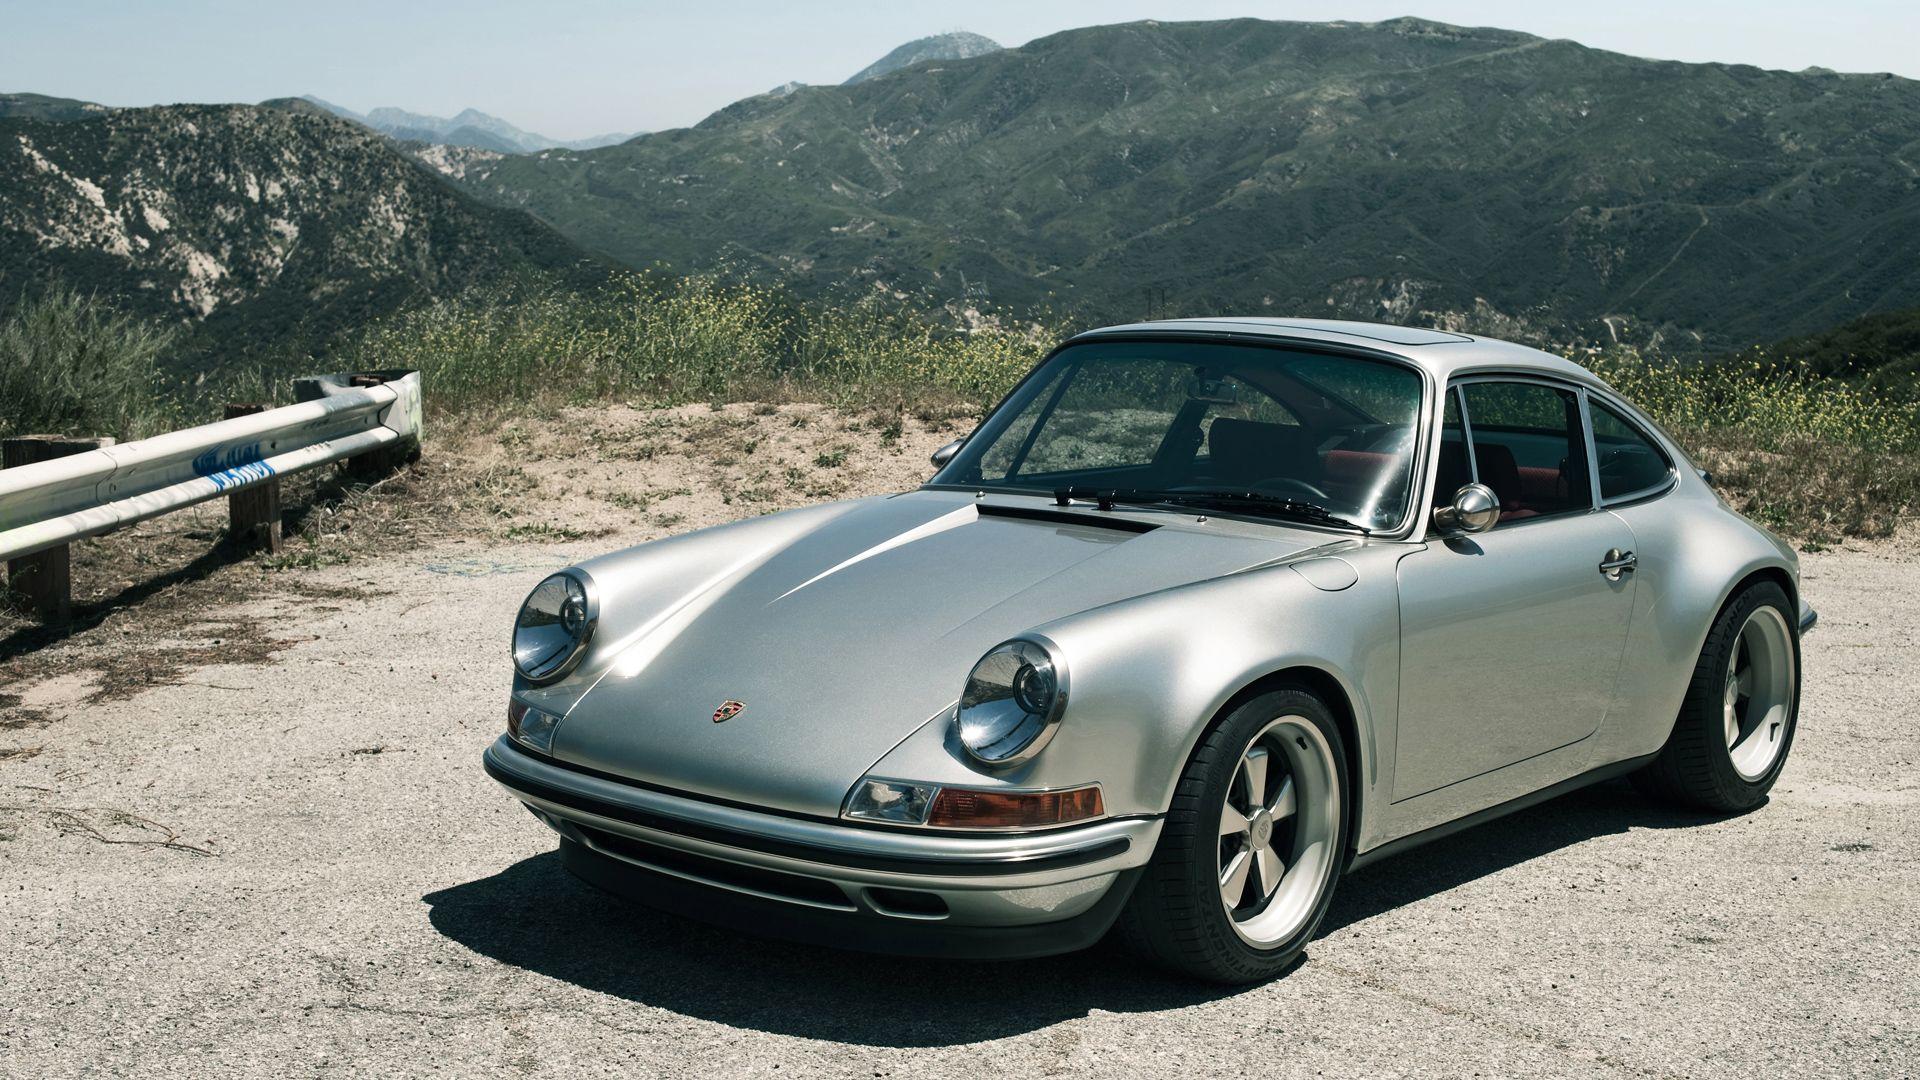 Old Porsche 911 Wallpapers Top Free Old Porsche 911 Backgrounds Wallpaperaccess